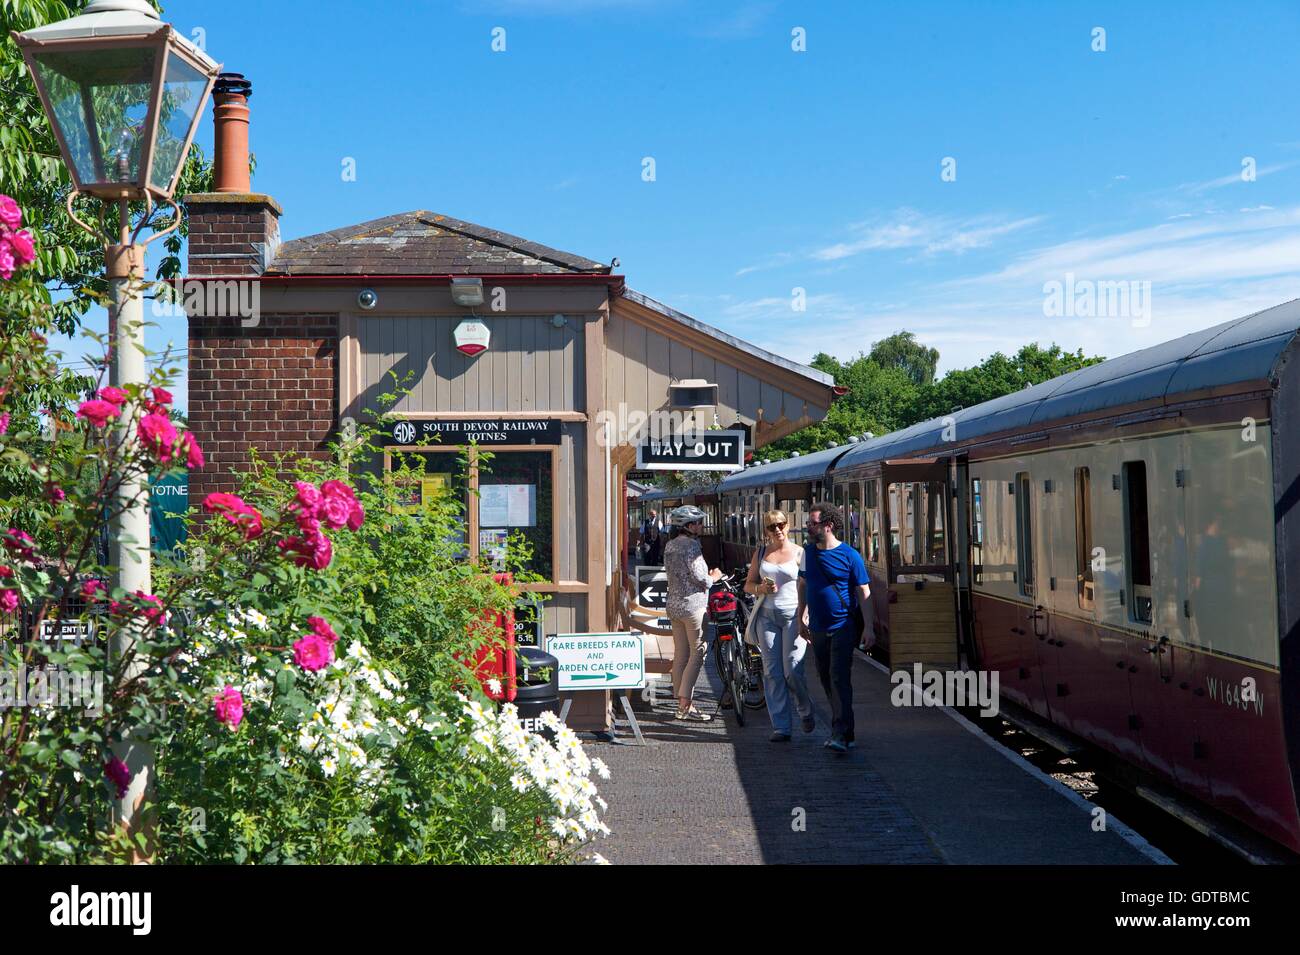 Totnes Littlehempston station on the 'South Devon Railway', UK Stock Photo